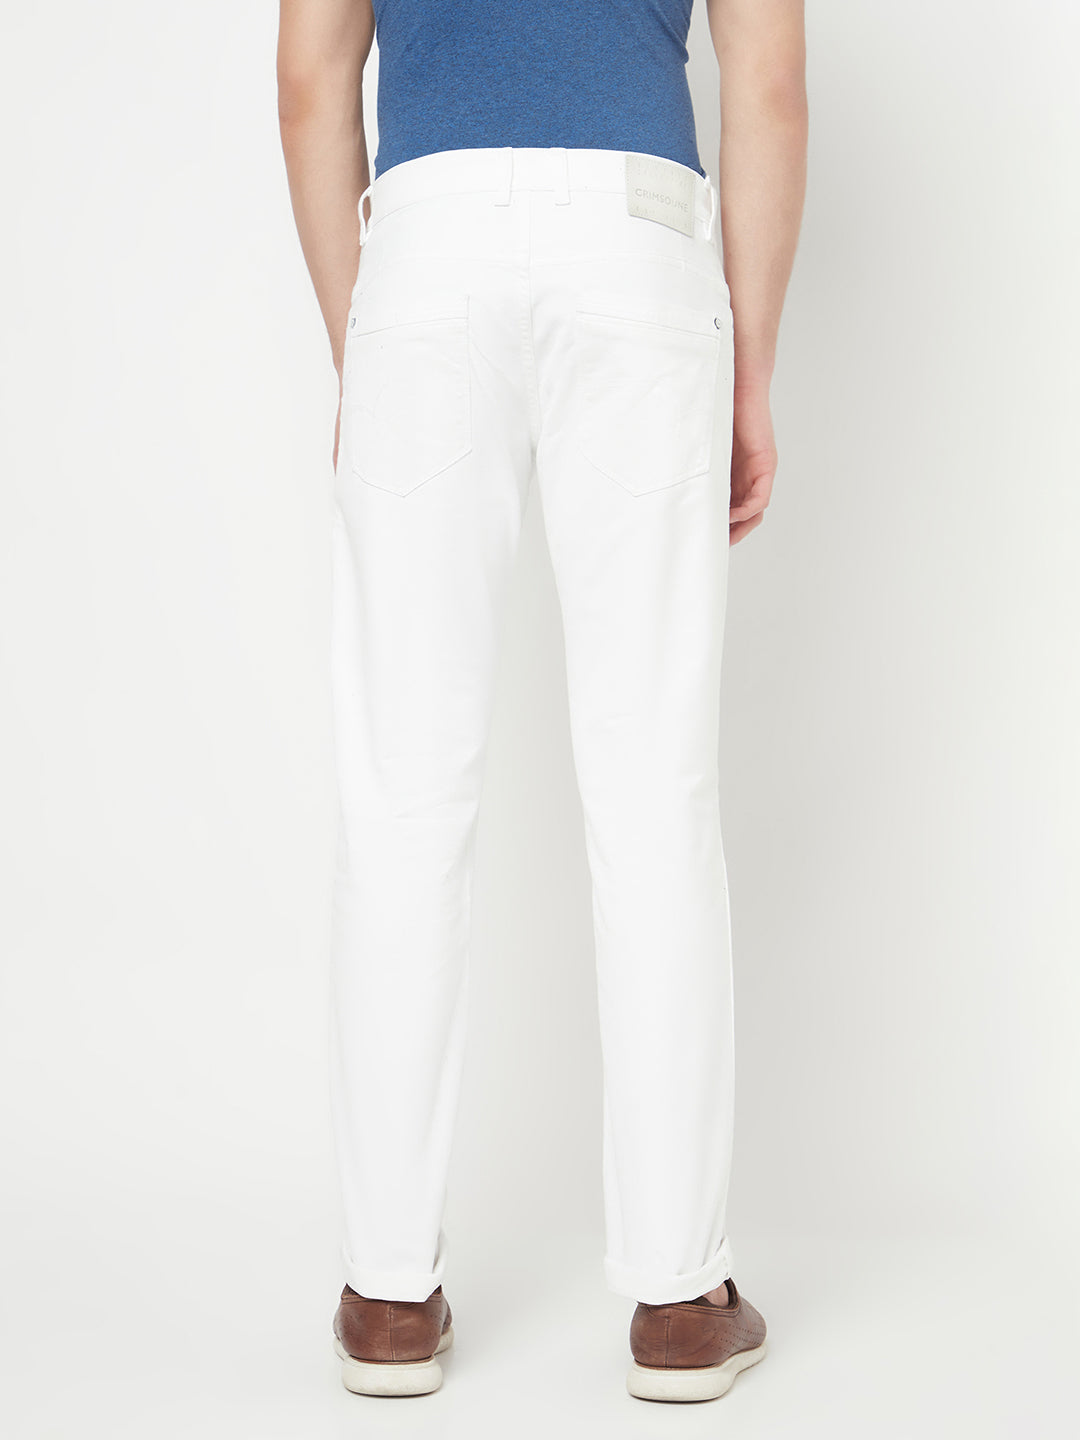 White Jeans - Men Jeans